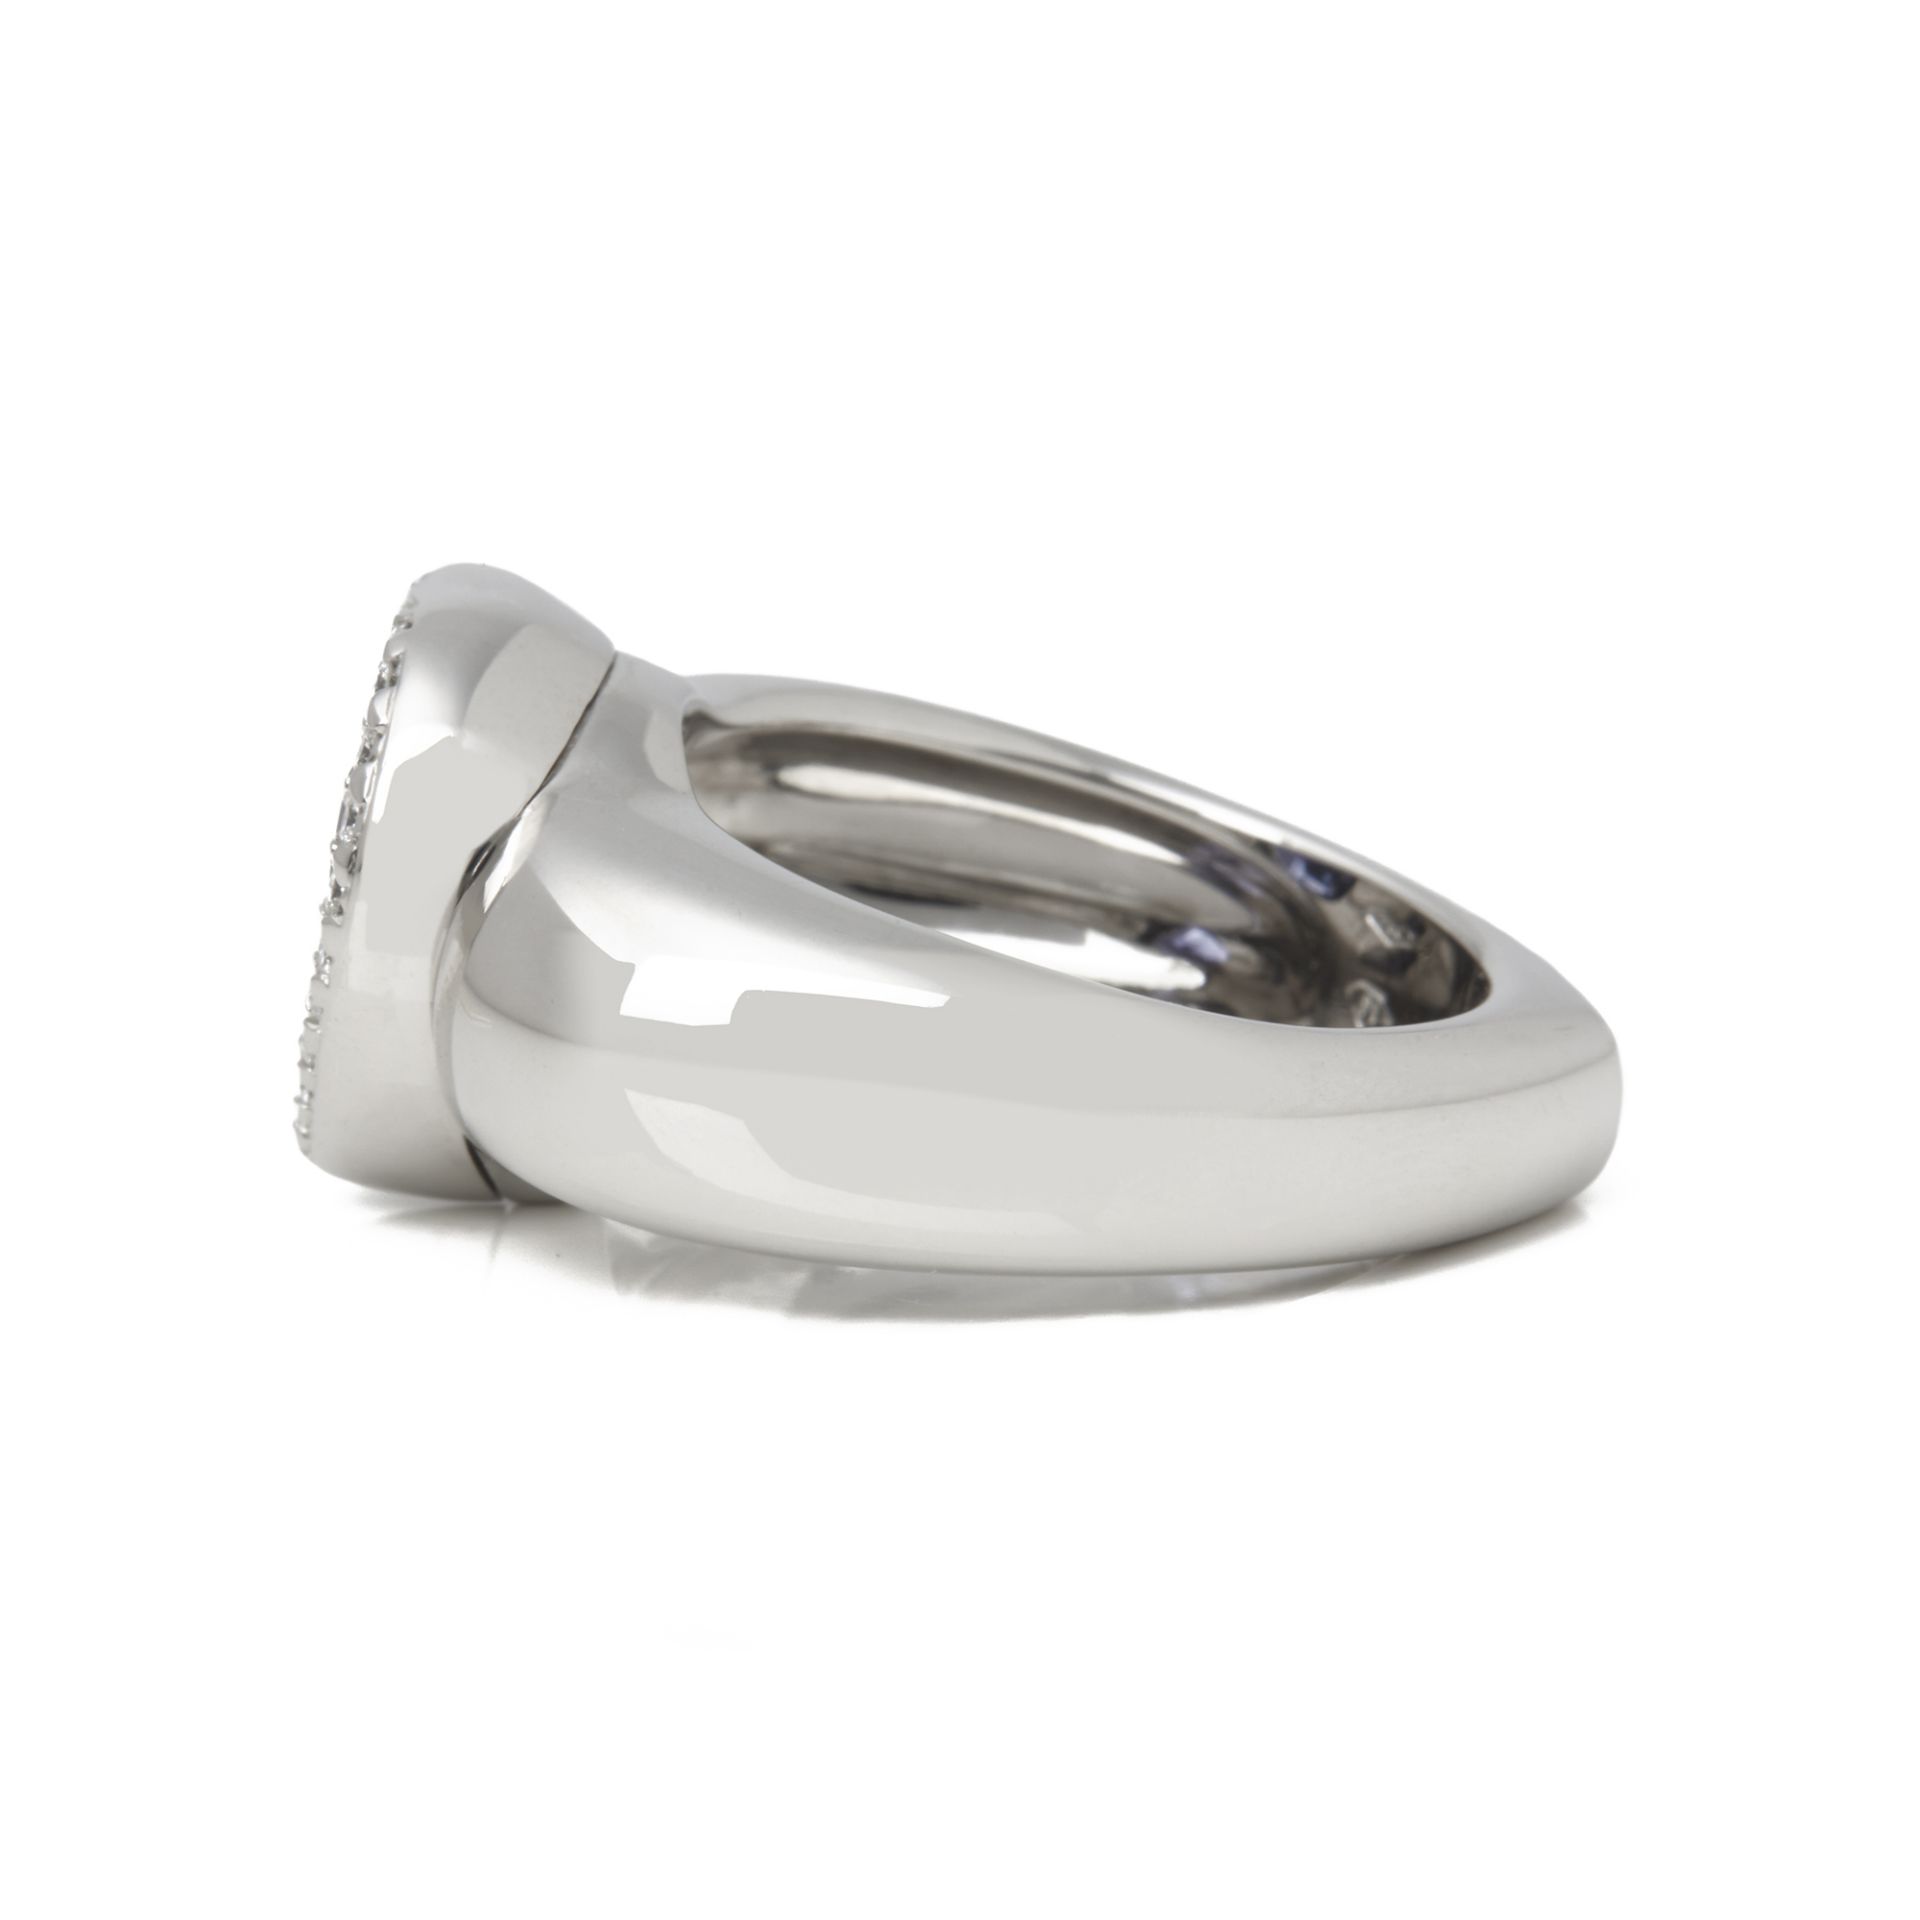 Piaget 18k White Gold Iolite & Diamond Heart Cocktail Ring - Image 6 of 7